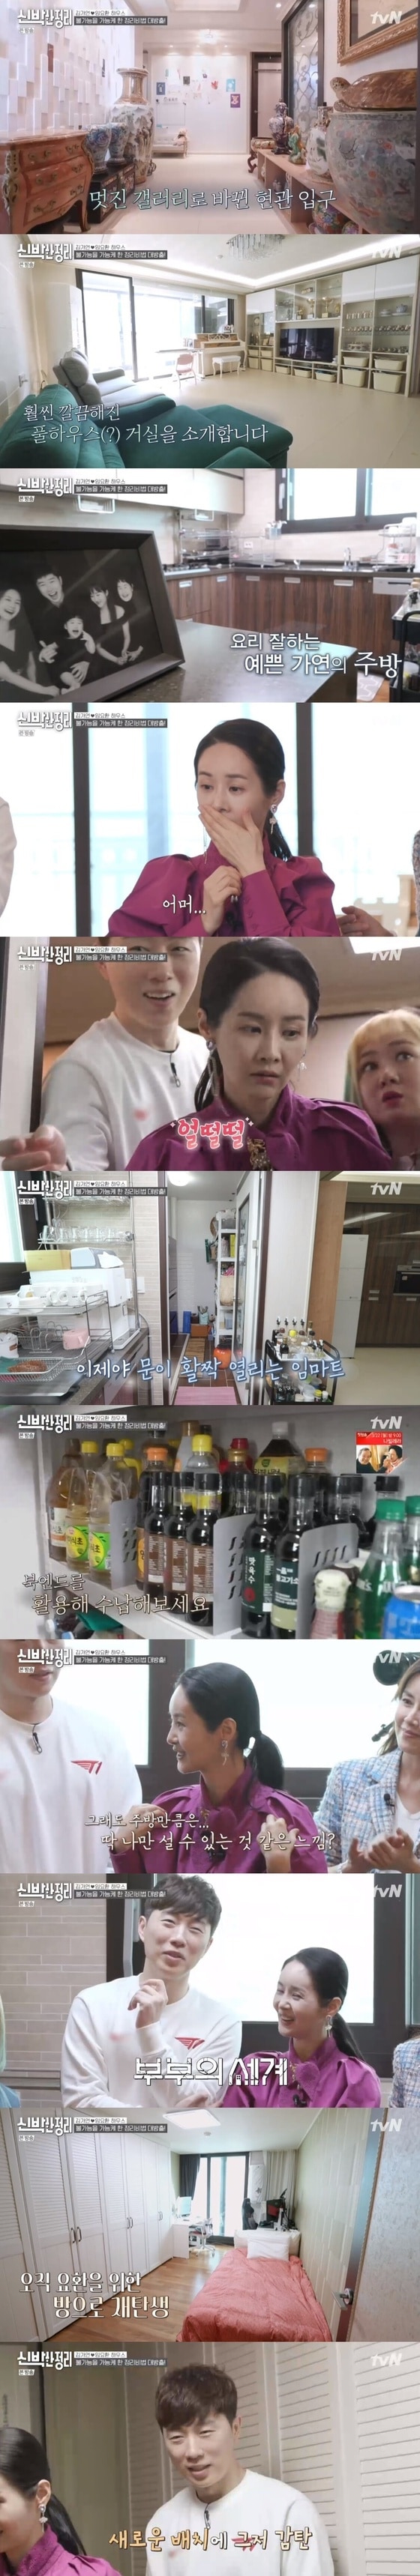 tvN '신박한 정리' 캡처 © 뉴스1